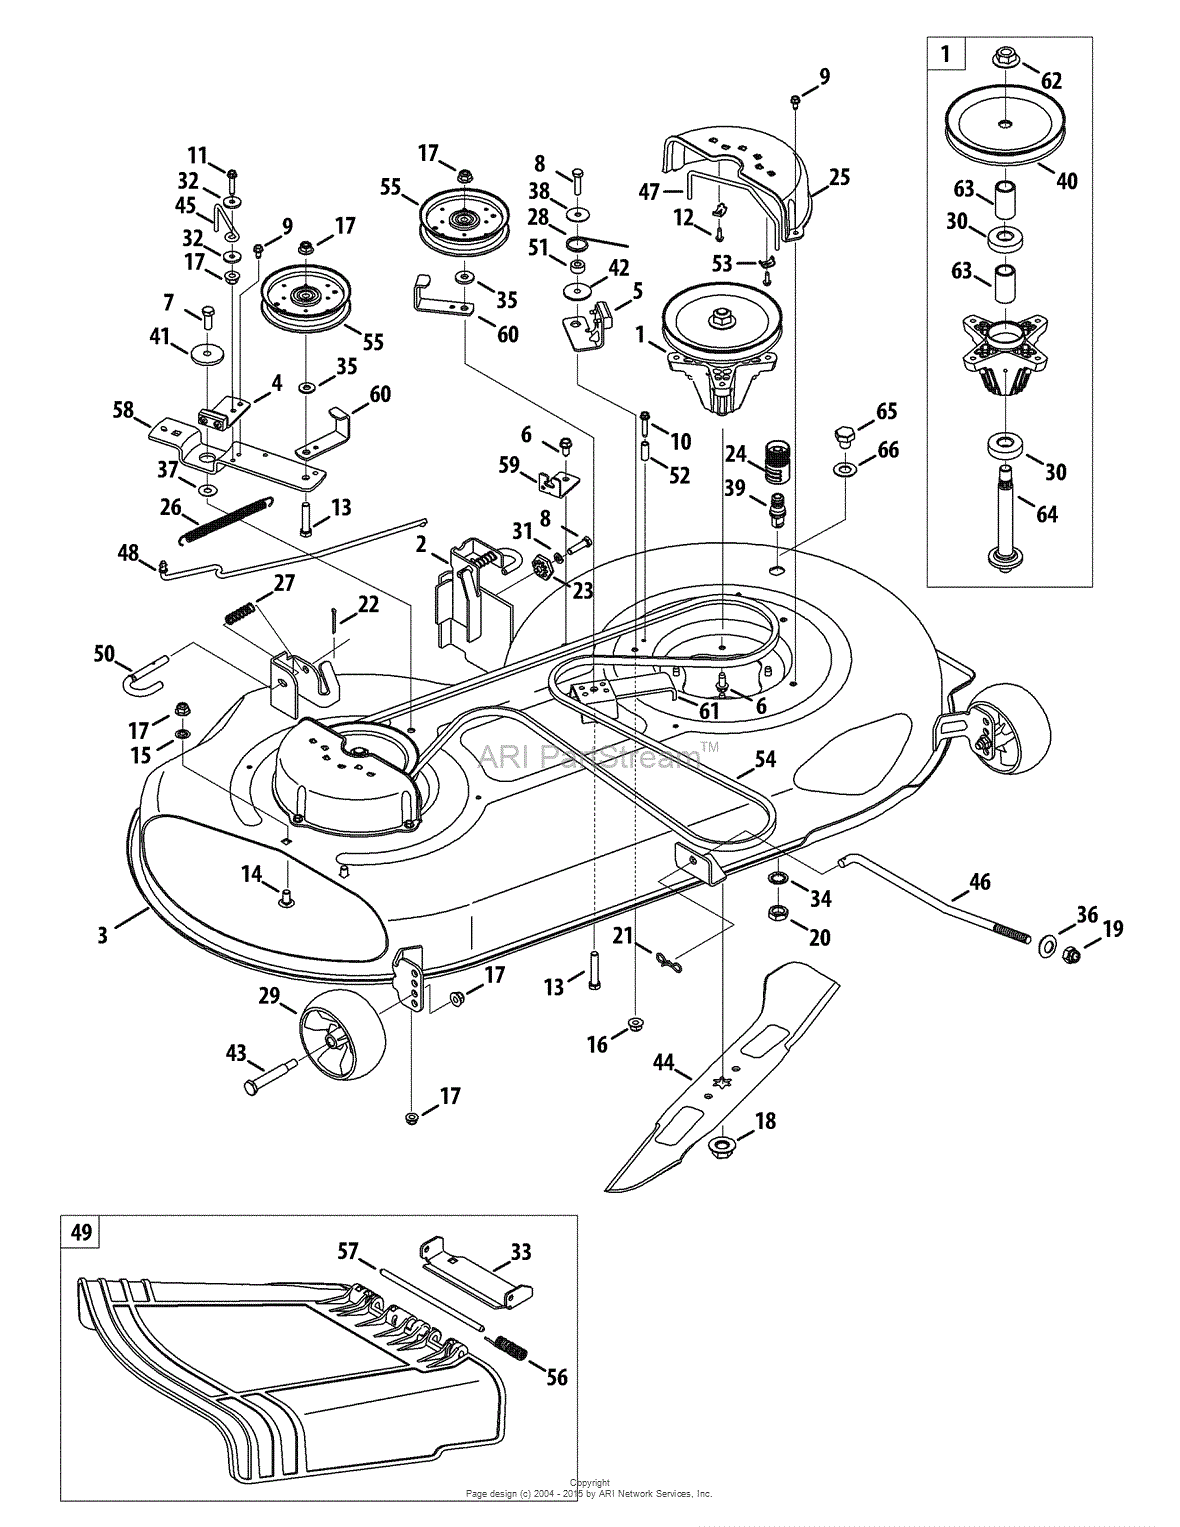 huskee slt5400h lawn mower wiring diagram